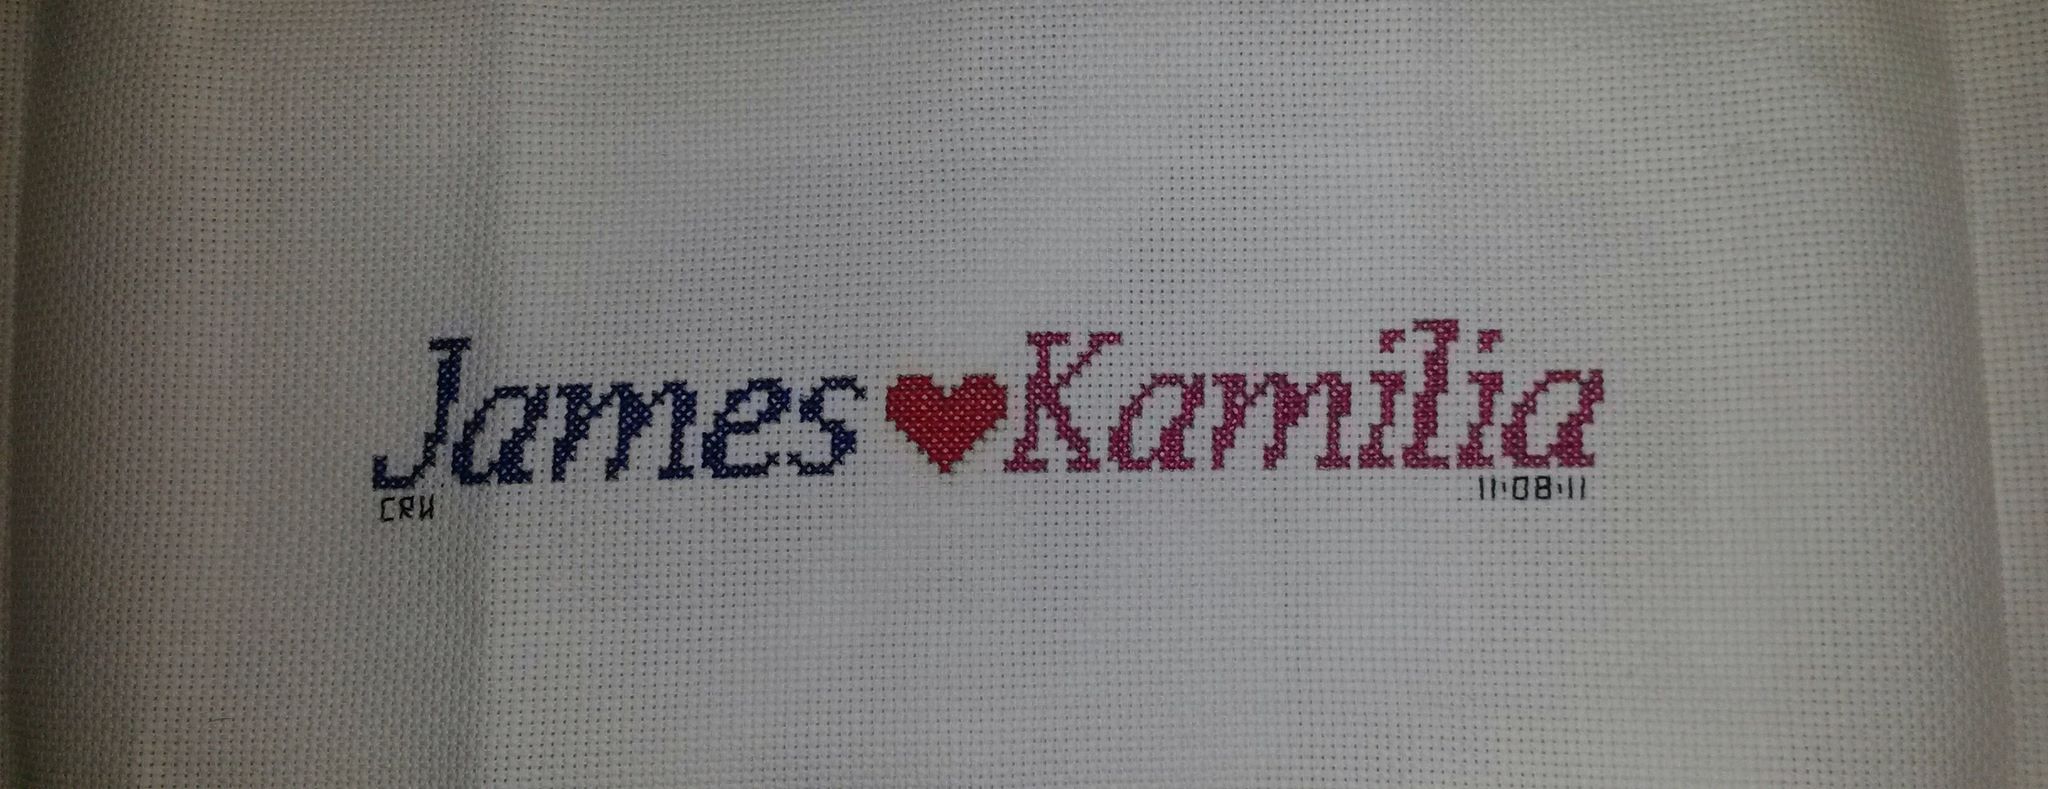 Cross stitch work photo James loves Kamilia baby blanket view author facebook user Carrie Renae Uetz